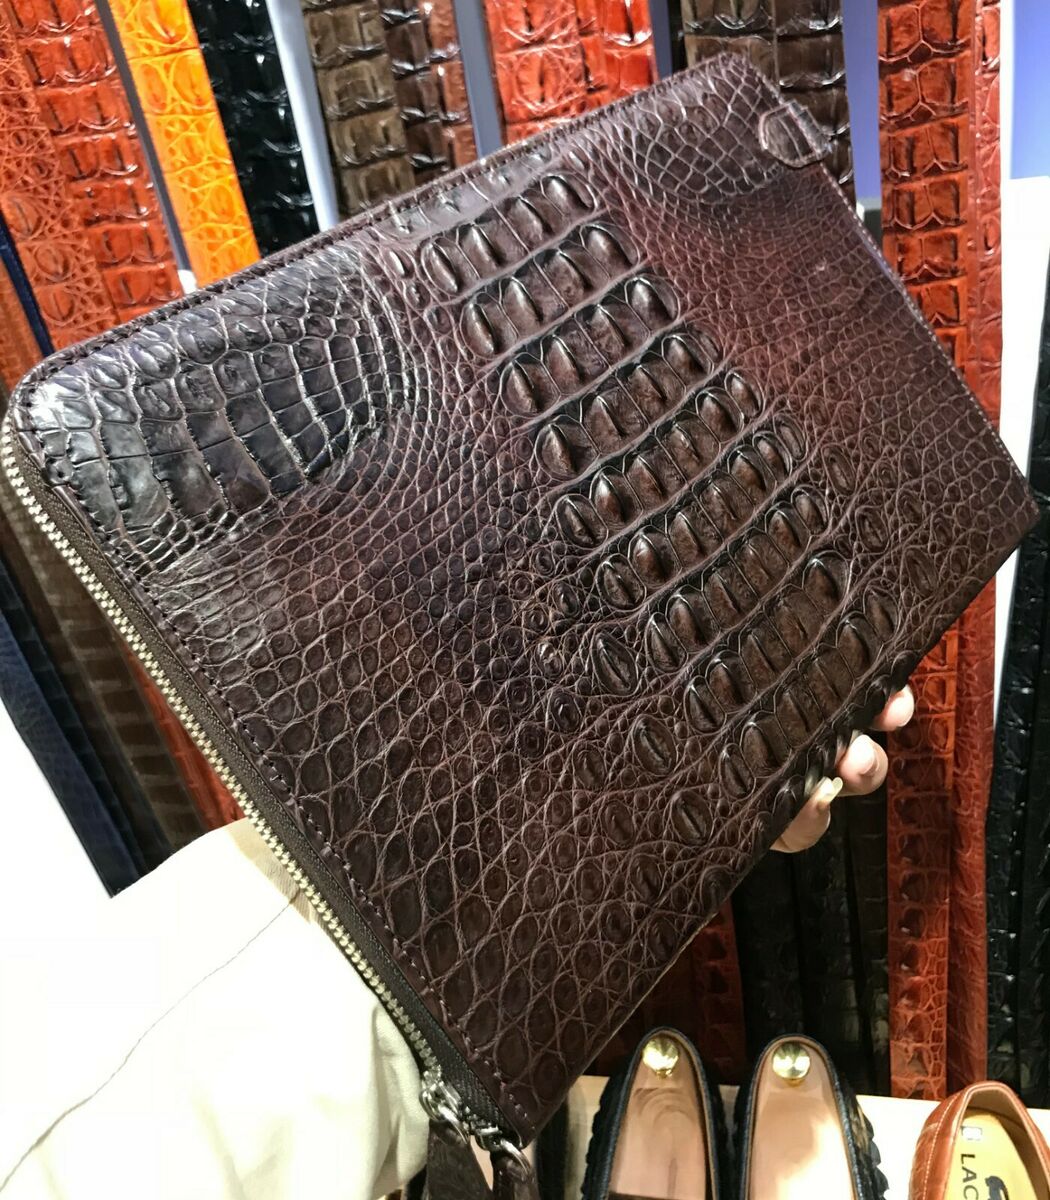 Gennuine Crocodile Leather Handbag Clutch Bag Purse, Clutch Wristlet Wallet